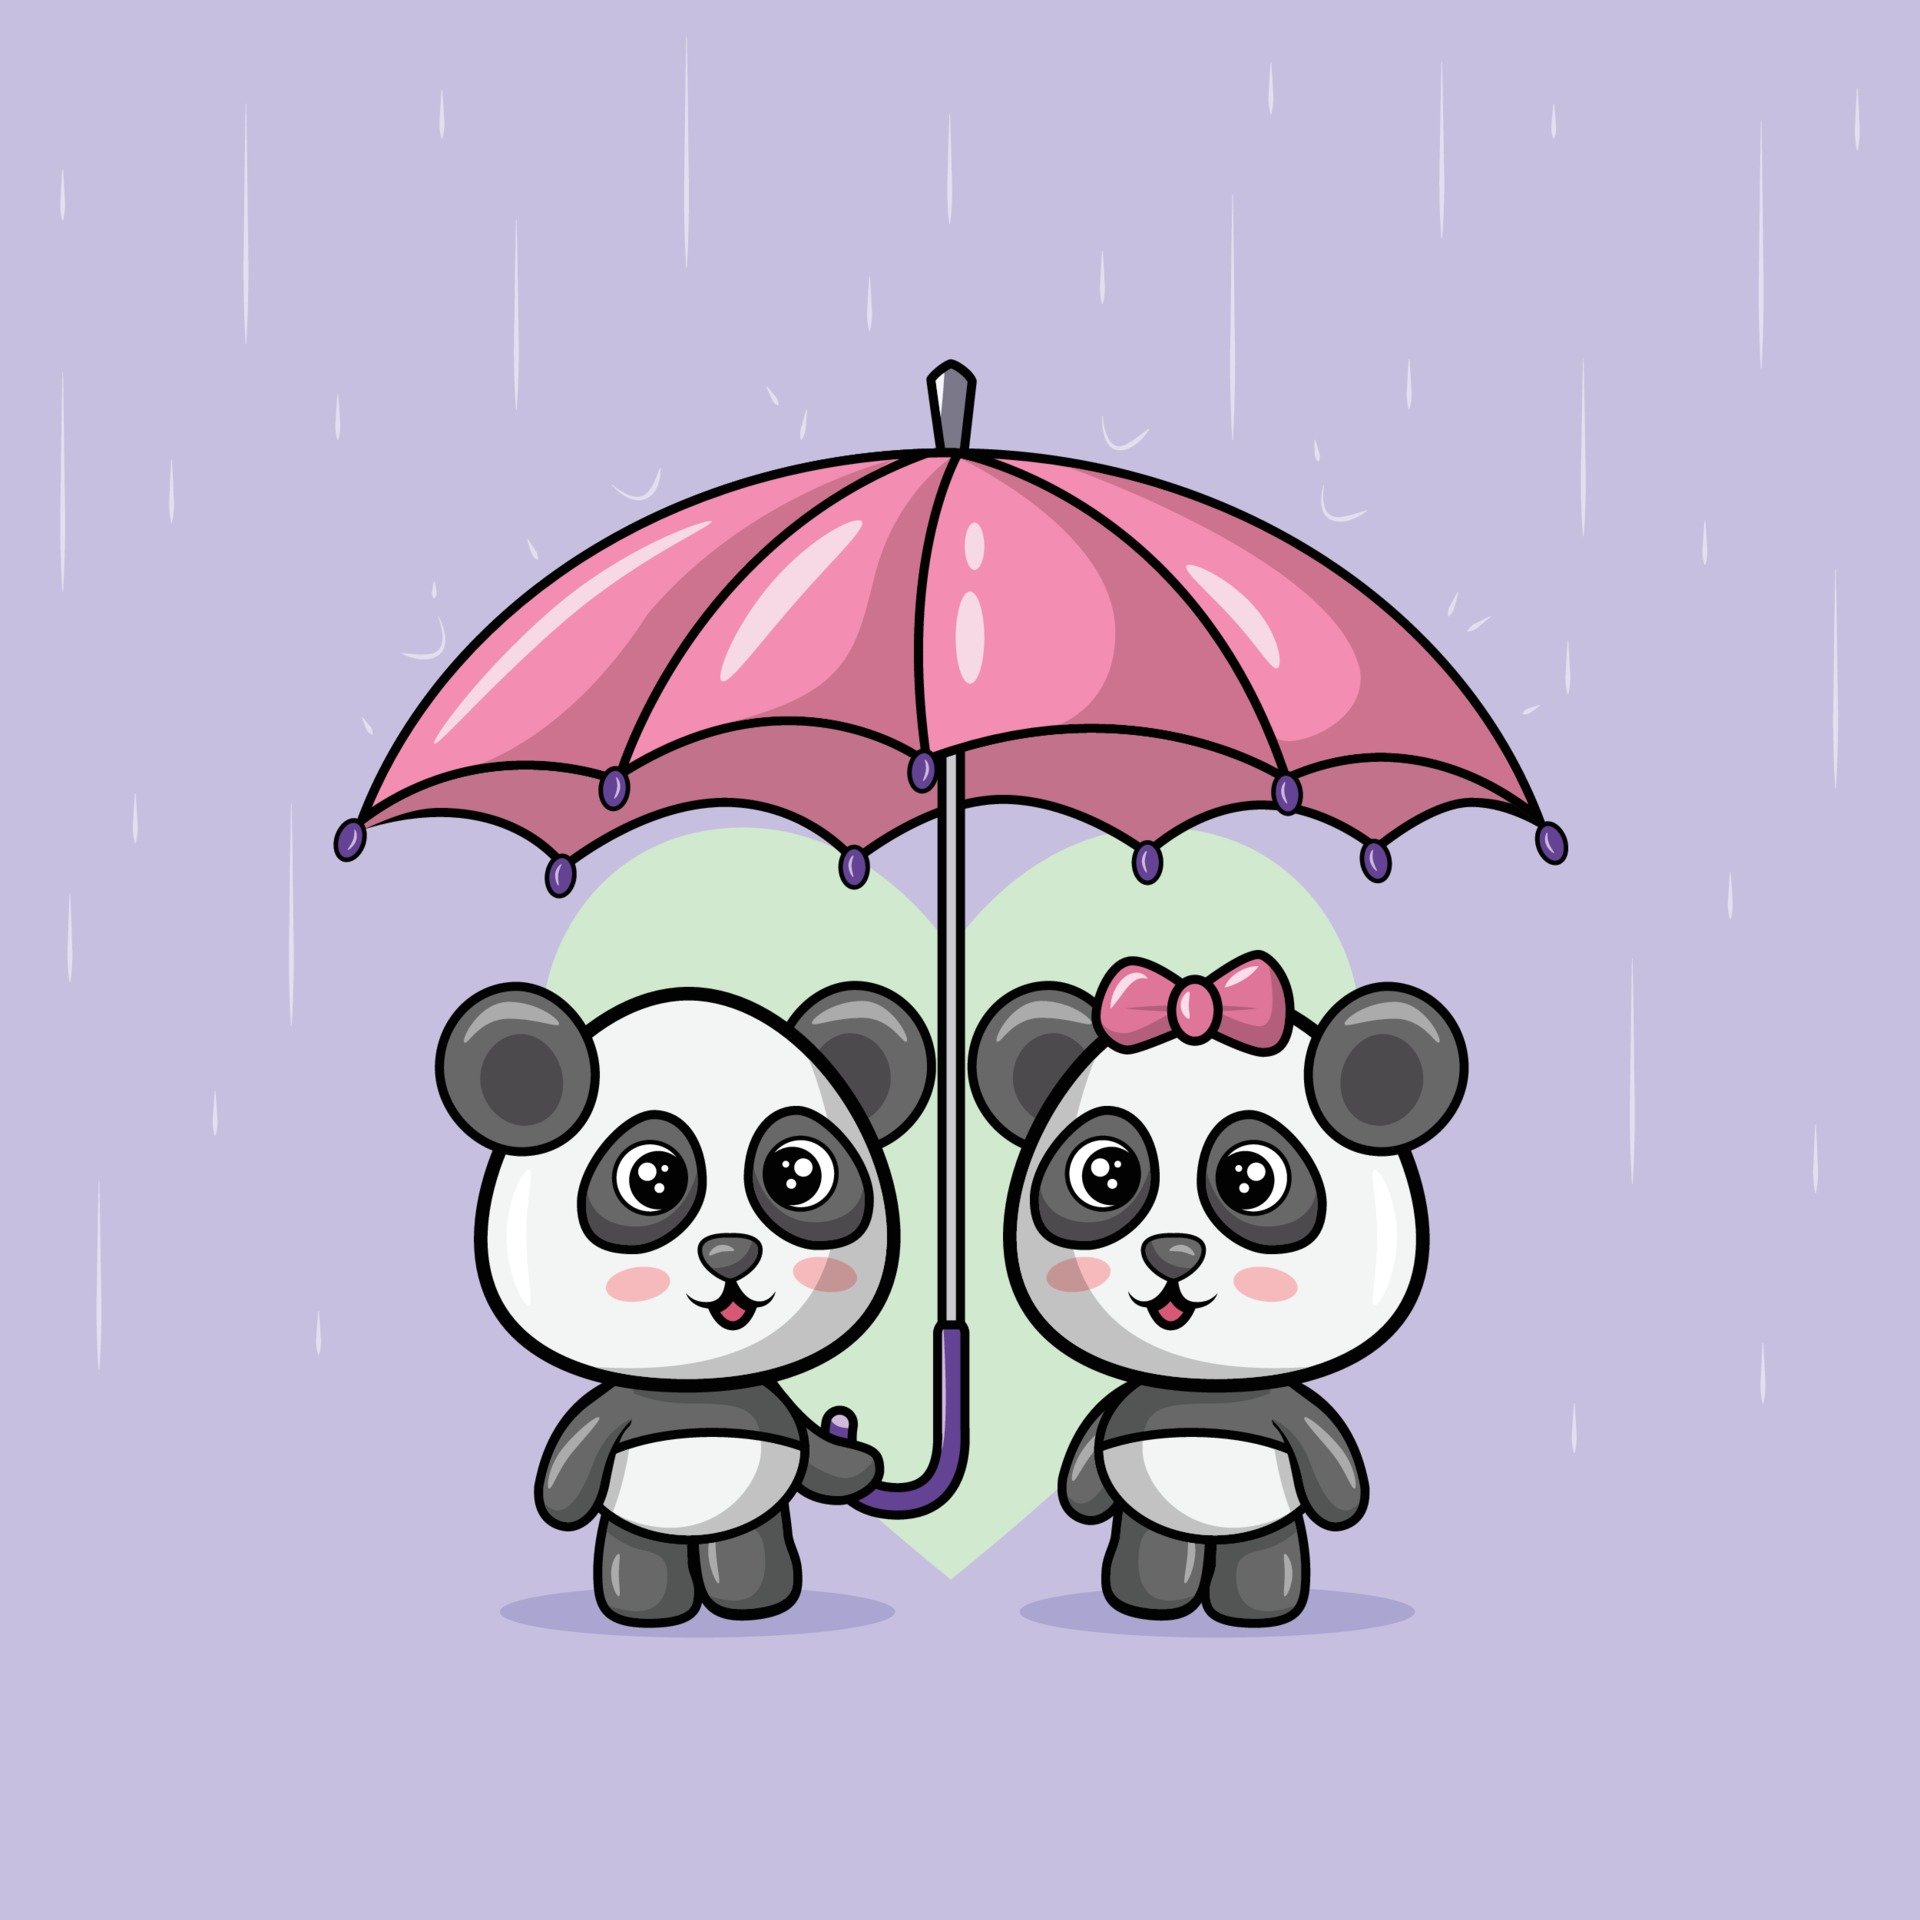 illustration of cute panda couple animal using umbrella together